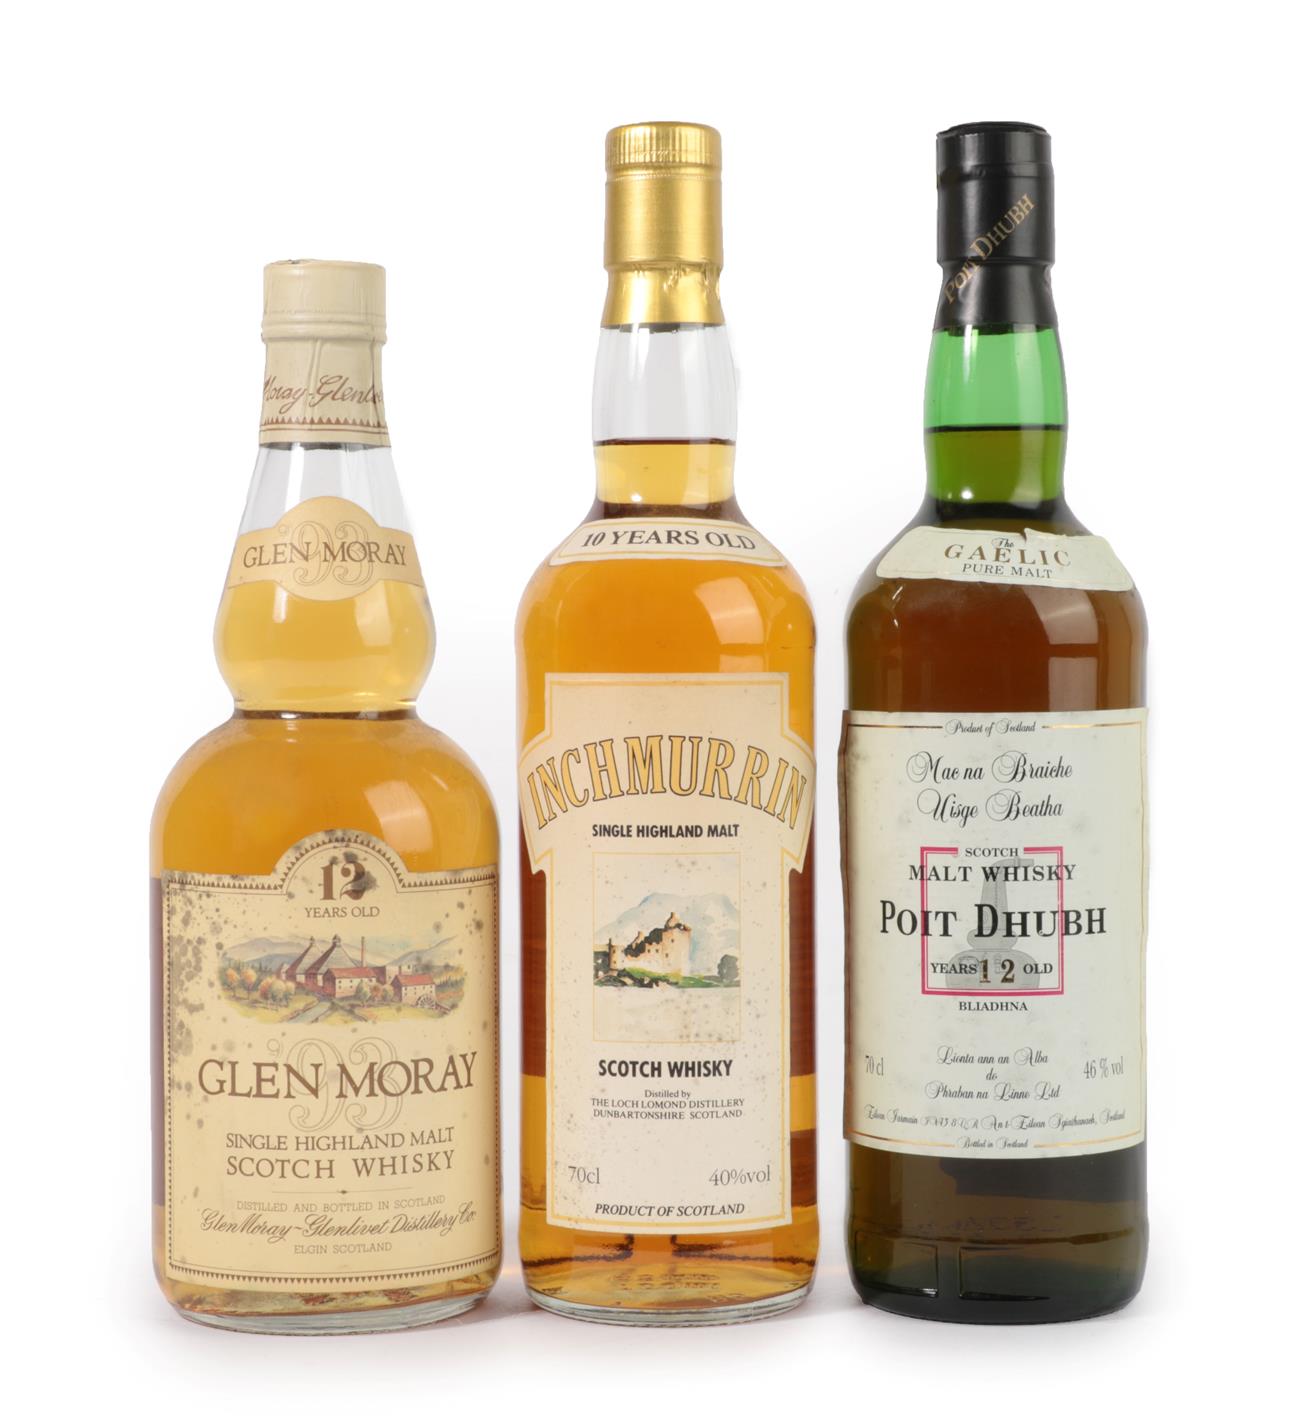 Lot 5069 - Poit Dhubh 12 Years Old Mac Na Braiche Uisge Beatha (single malt water of life) Scotch Whisky,...